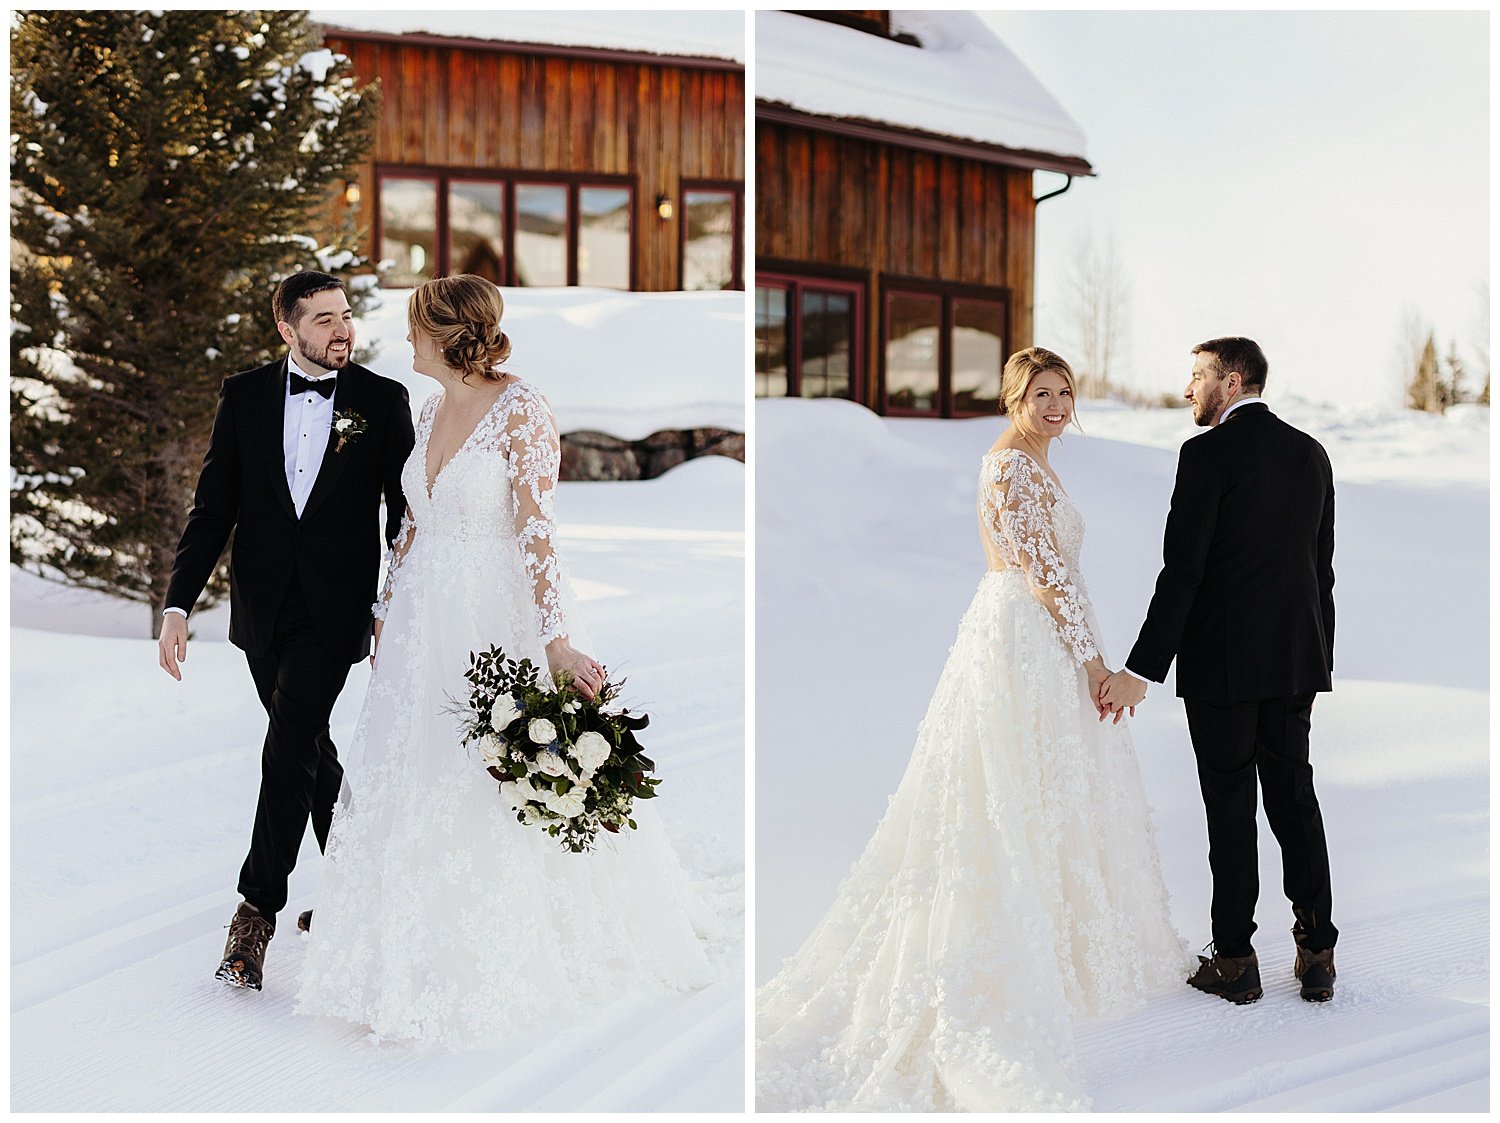 Wedding portraits in snow